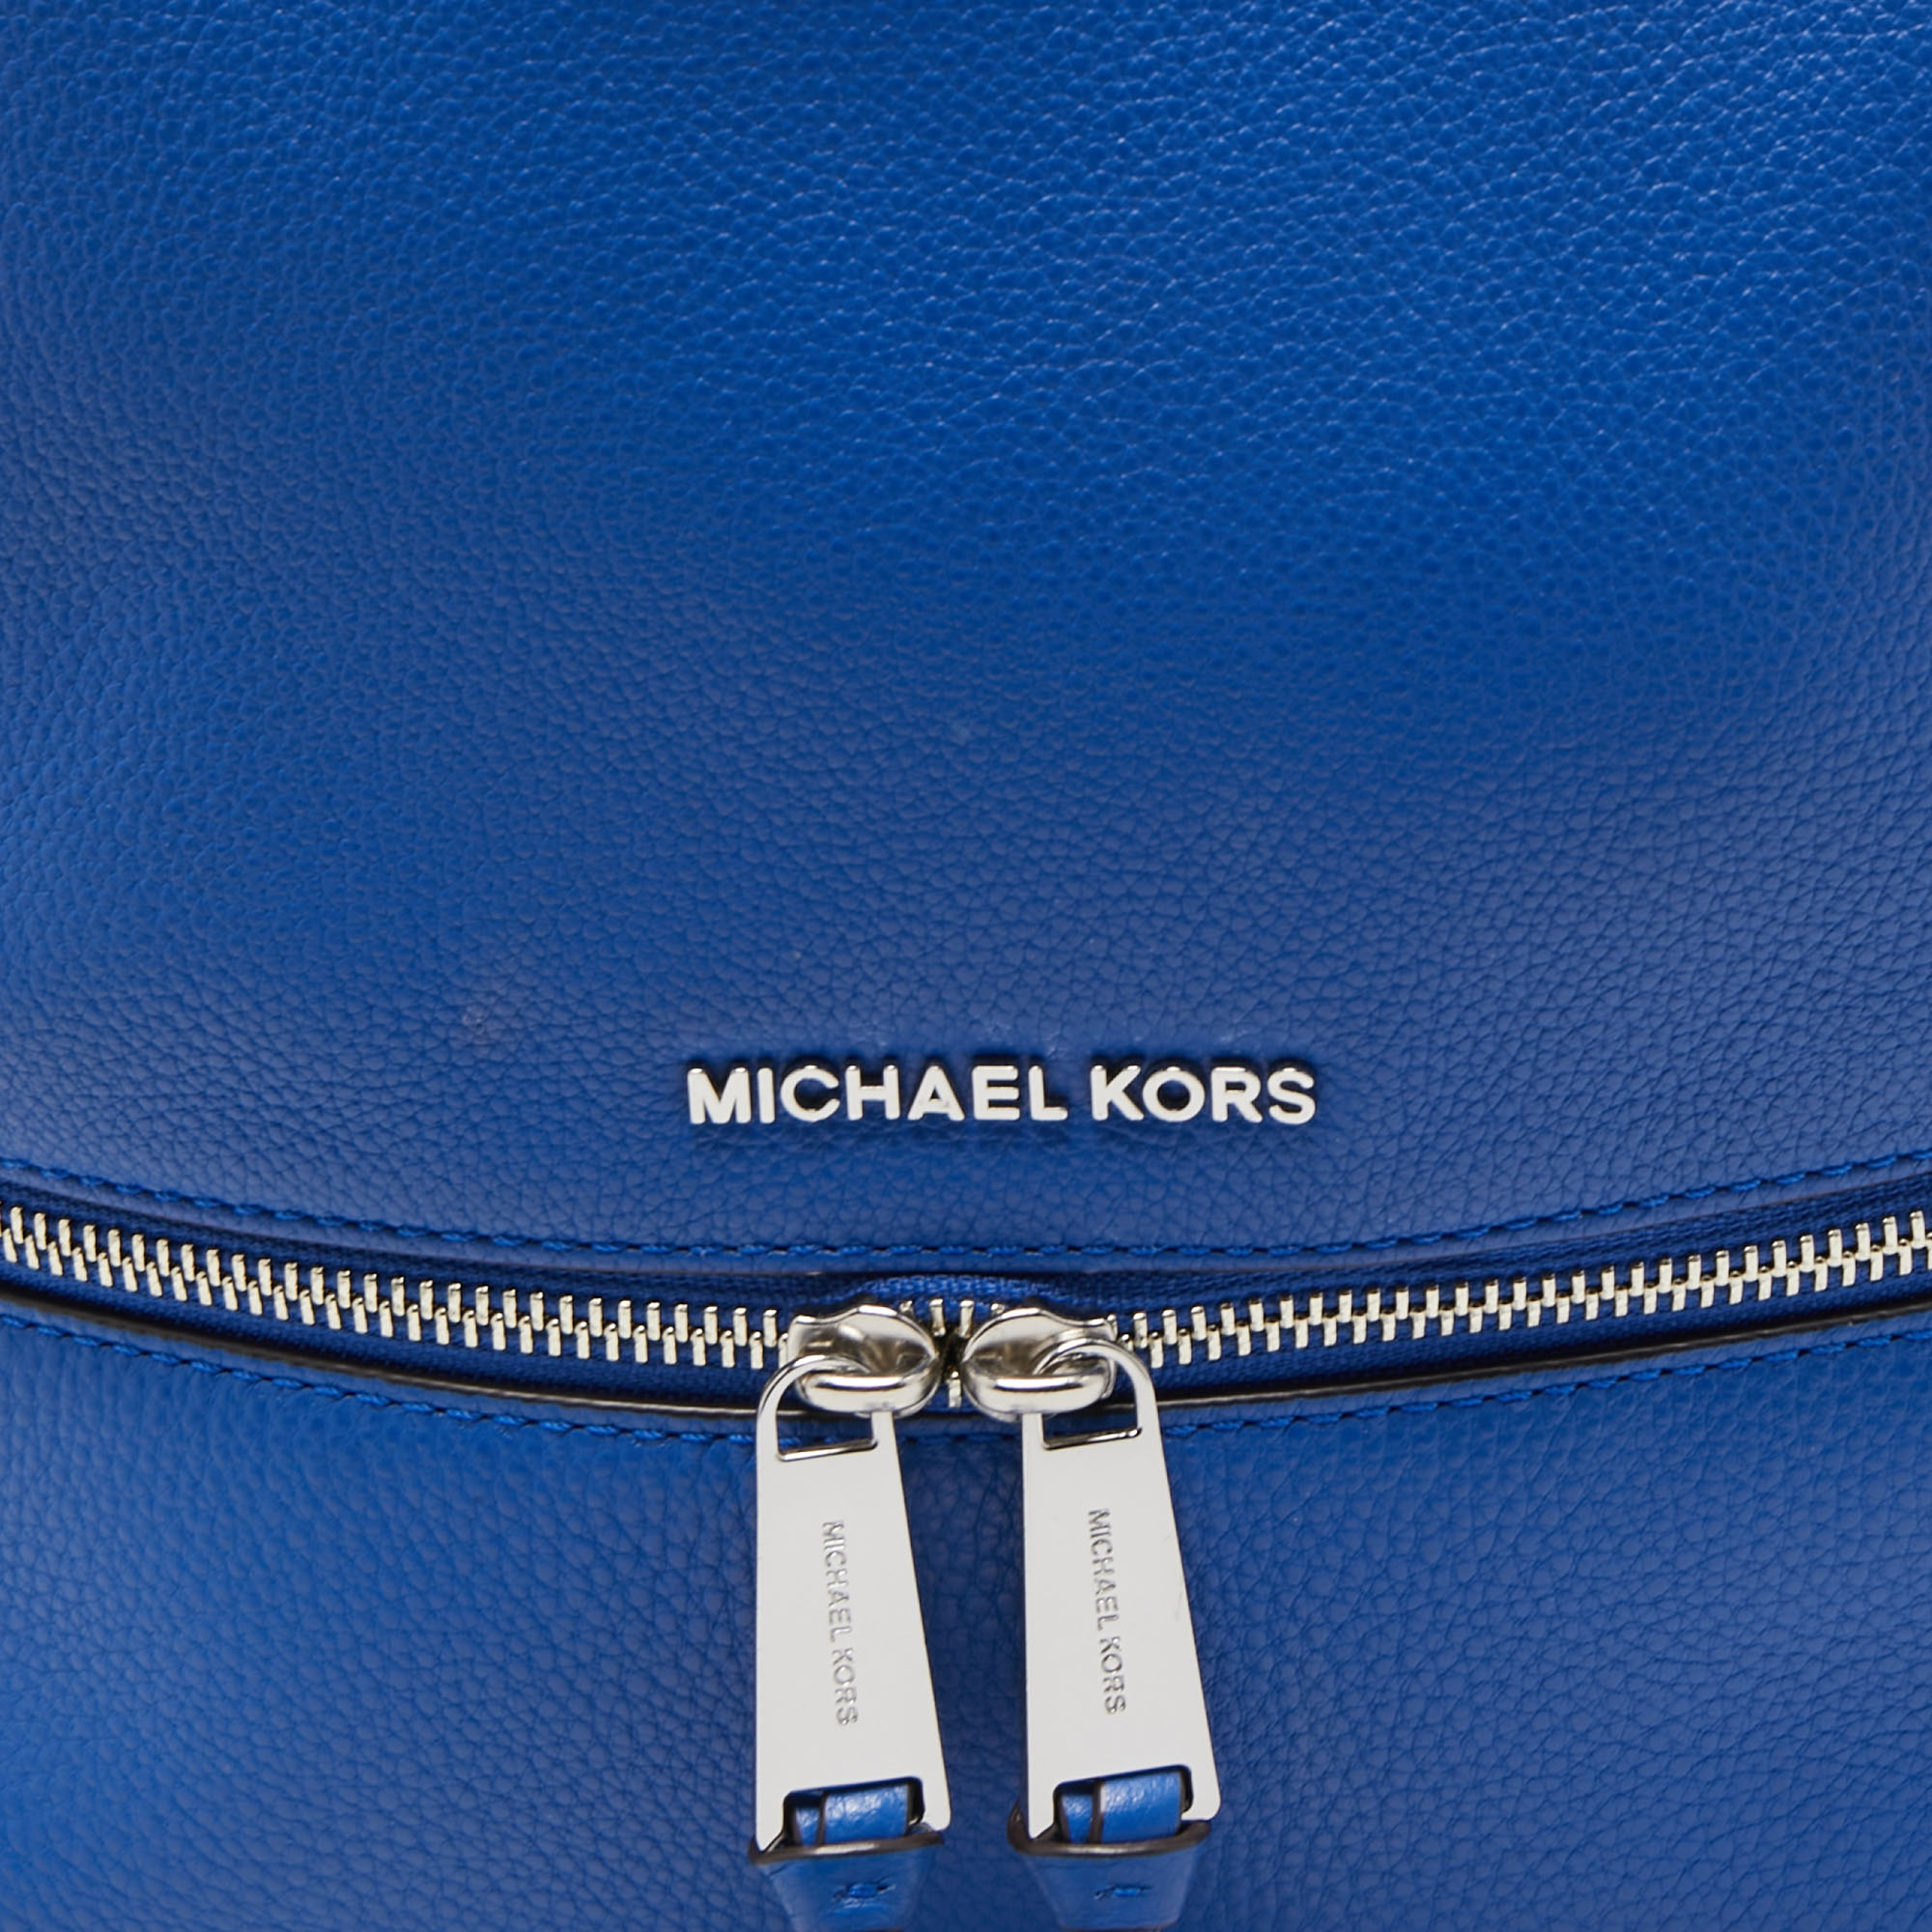 Michael Kors Blue Leather Rhea Backpack